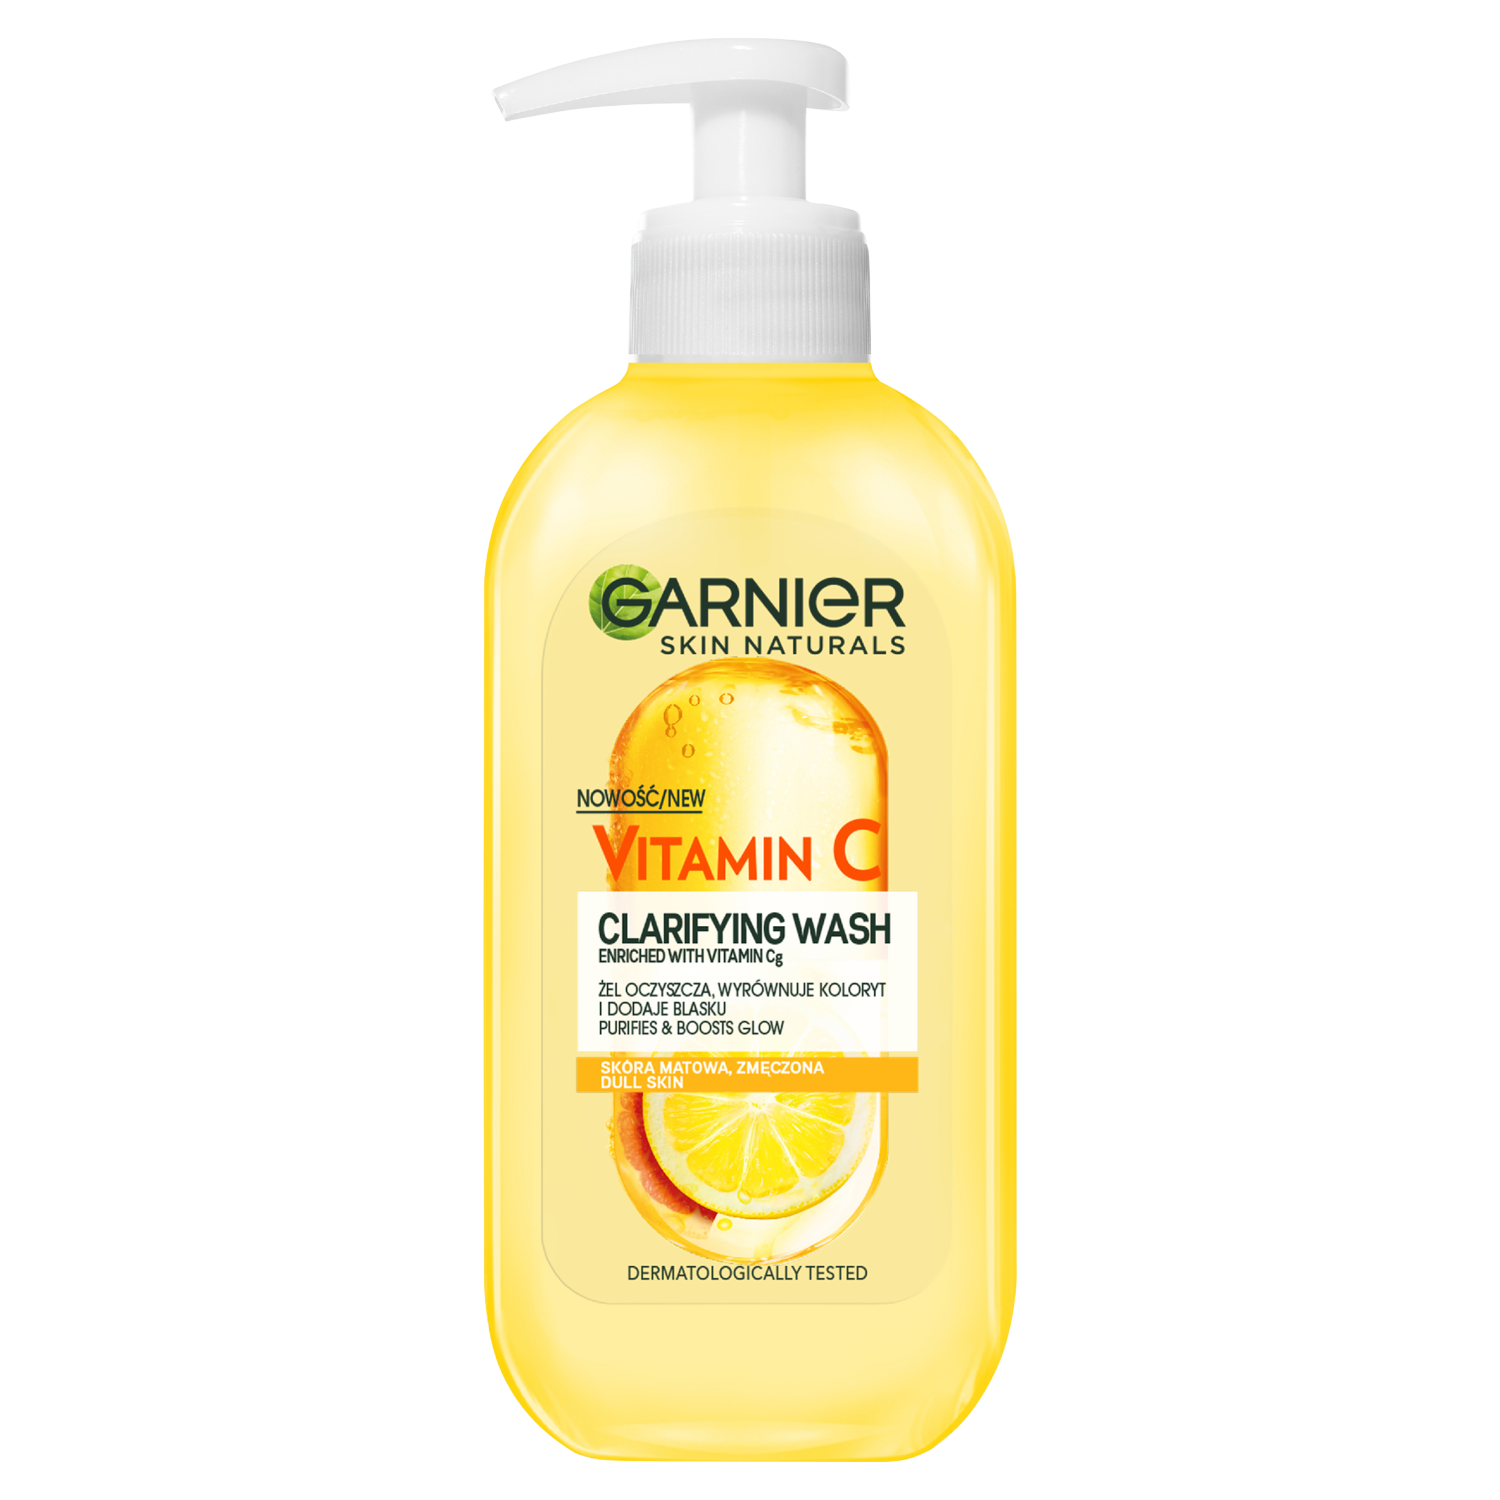 Garnier Vitamin C очищающий гель для лица, 200 мл